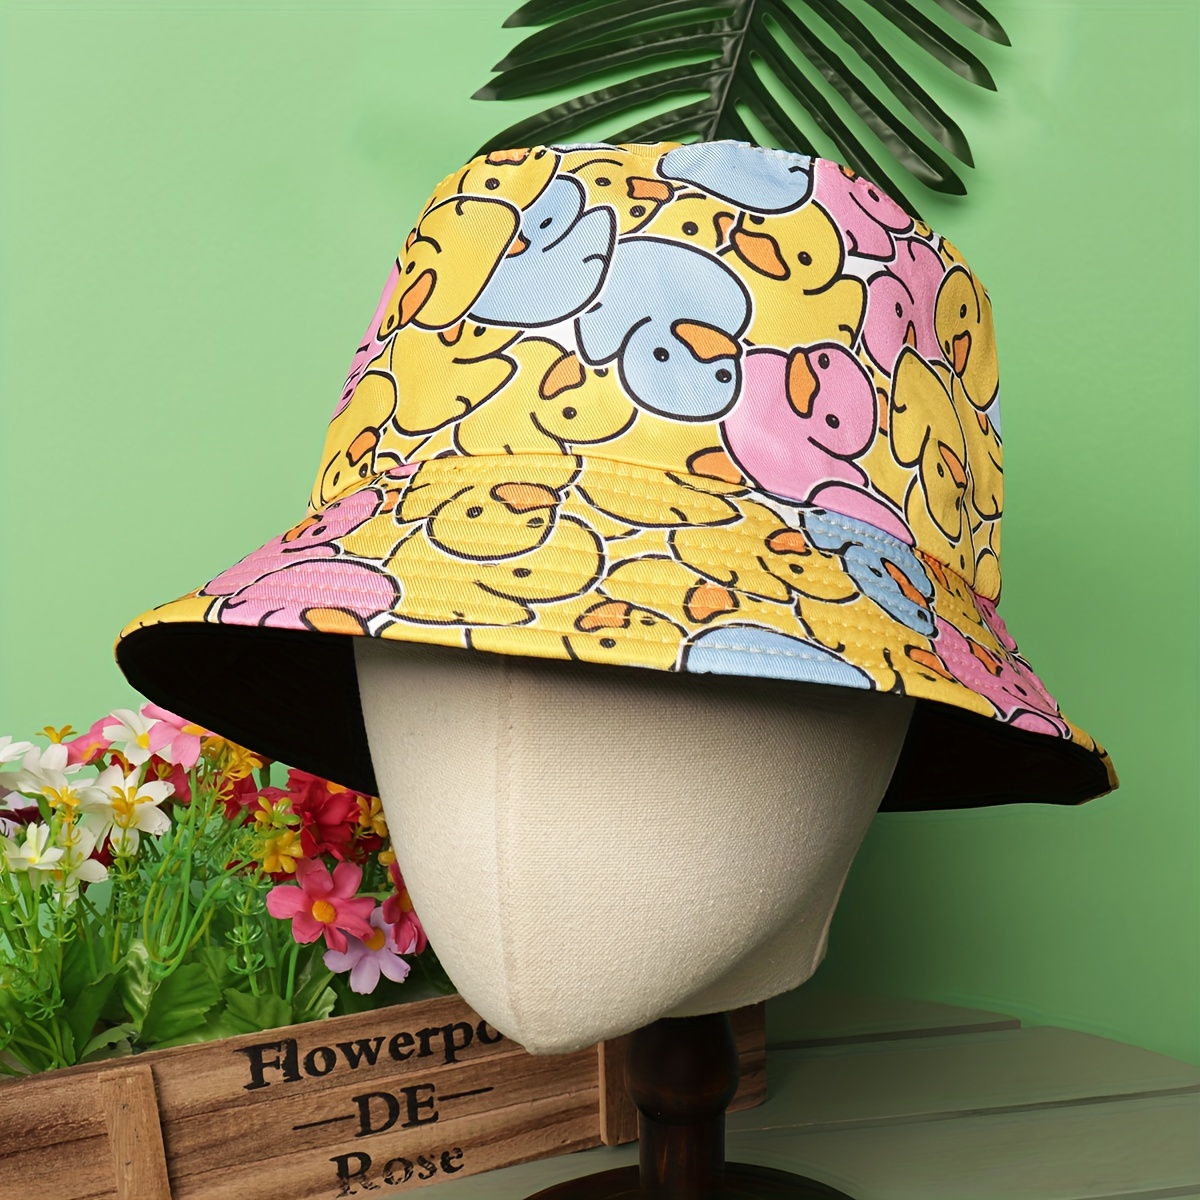 

Yellow Duck Printed Bucket Hat Reversible Cute Cartoon Basin Hats Lightweight Fisherman Cap For Women & Men